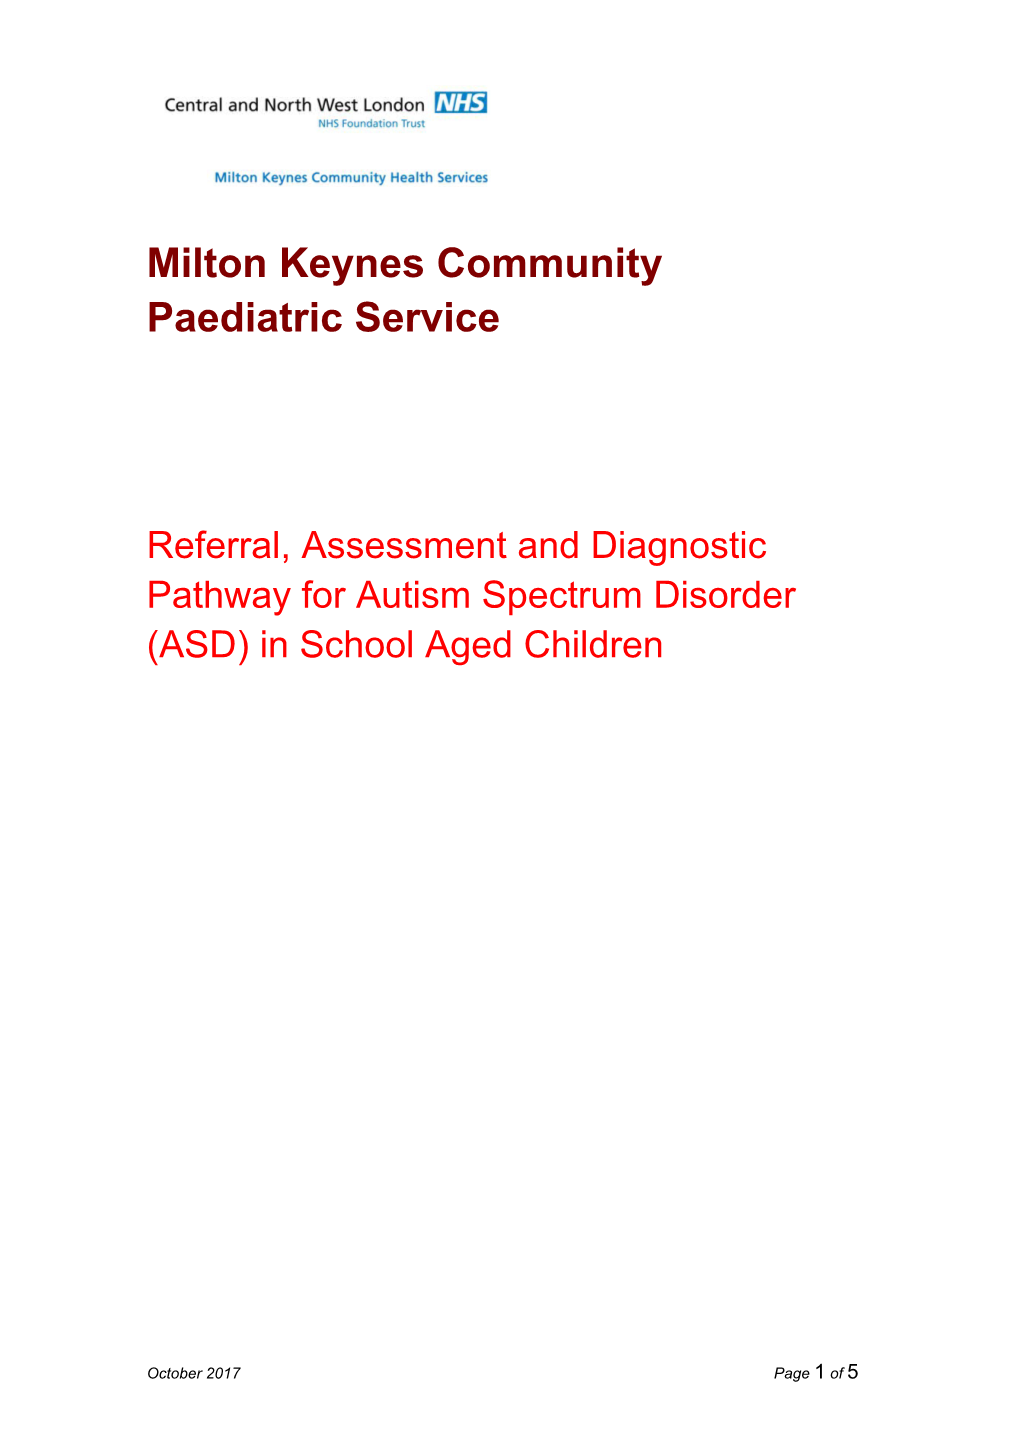 Milton Keynes Community Paediatric Service